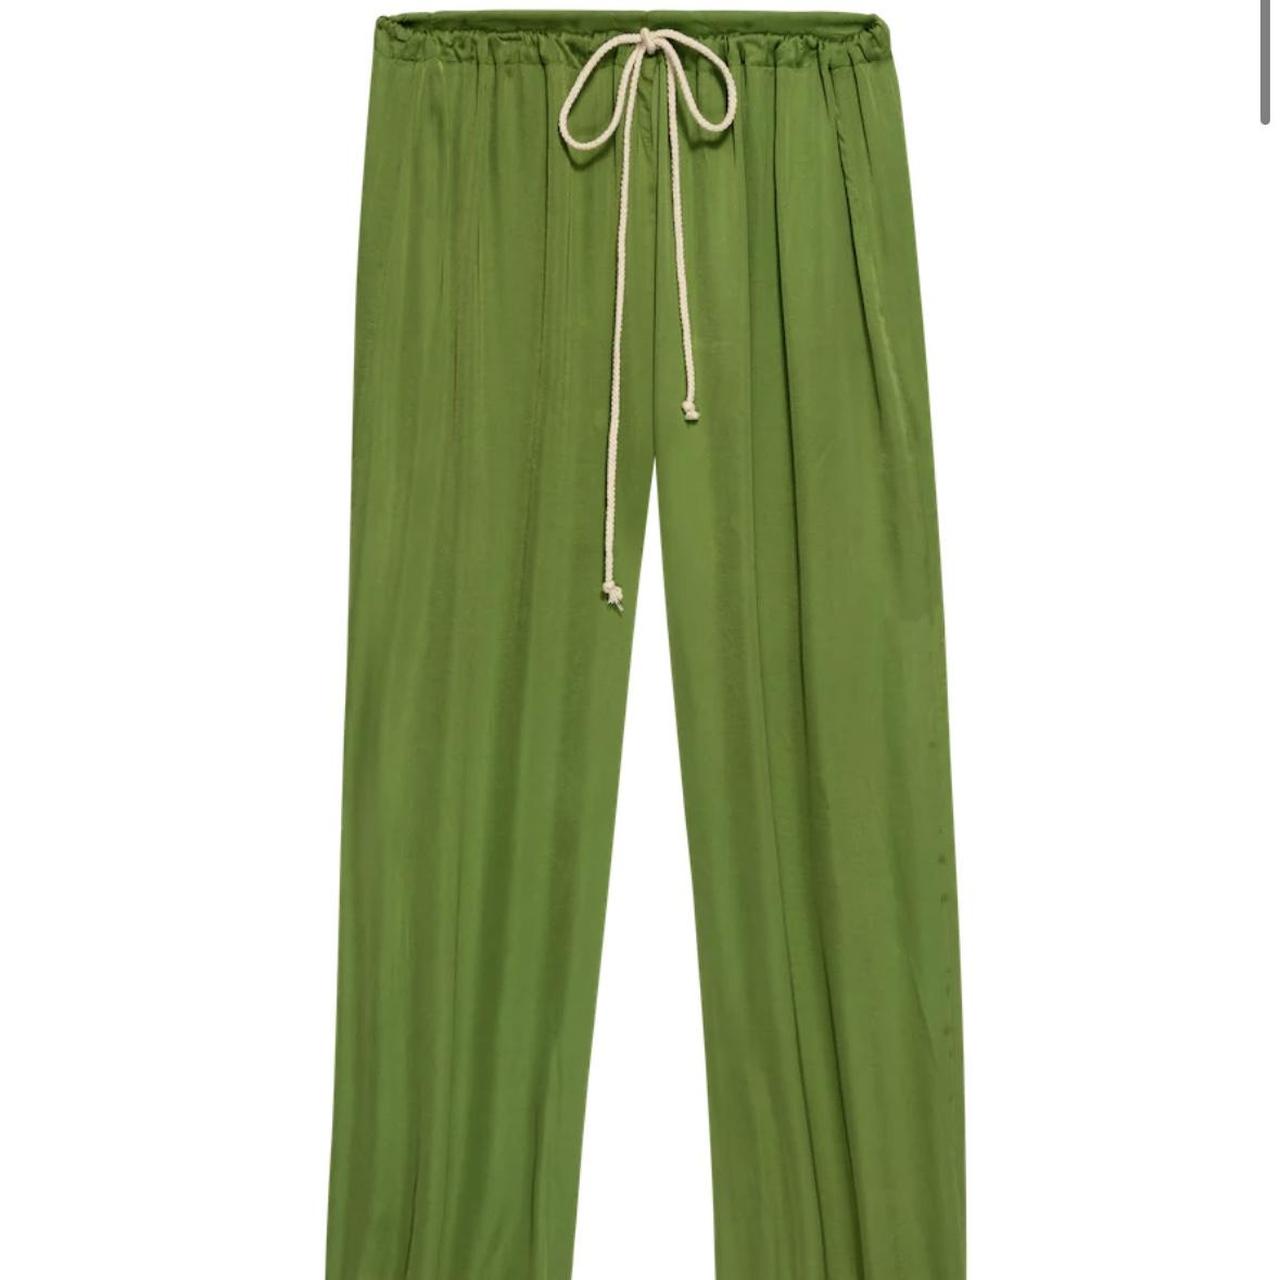 Donni. Green silk pants Color: Matcha A little... - Depop